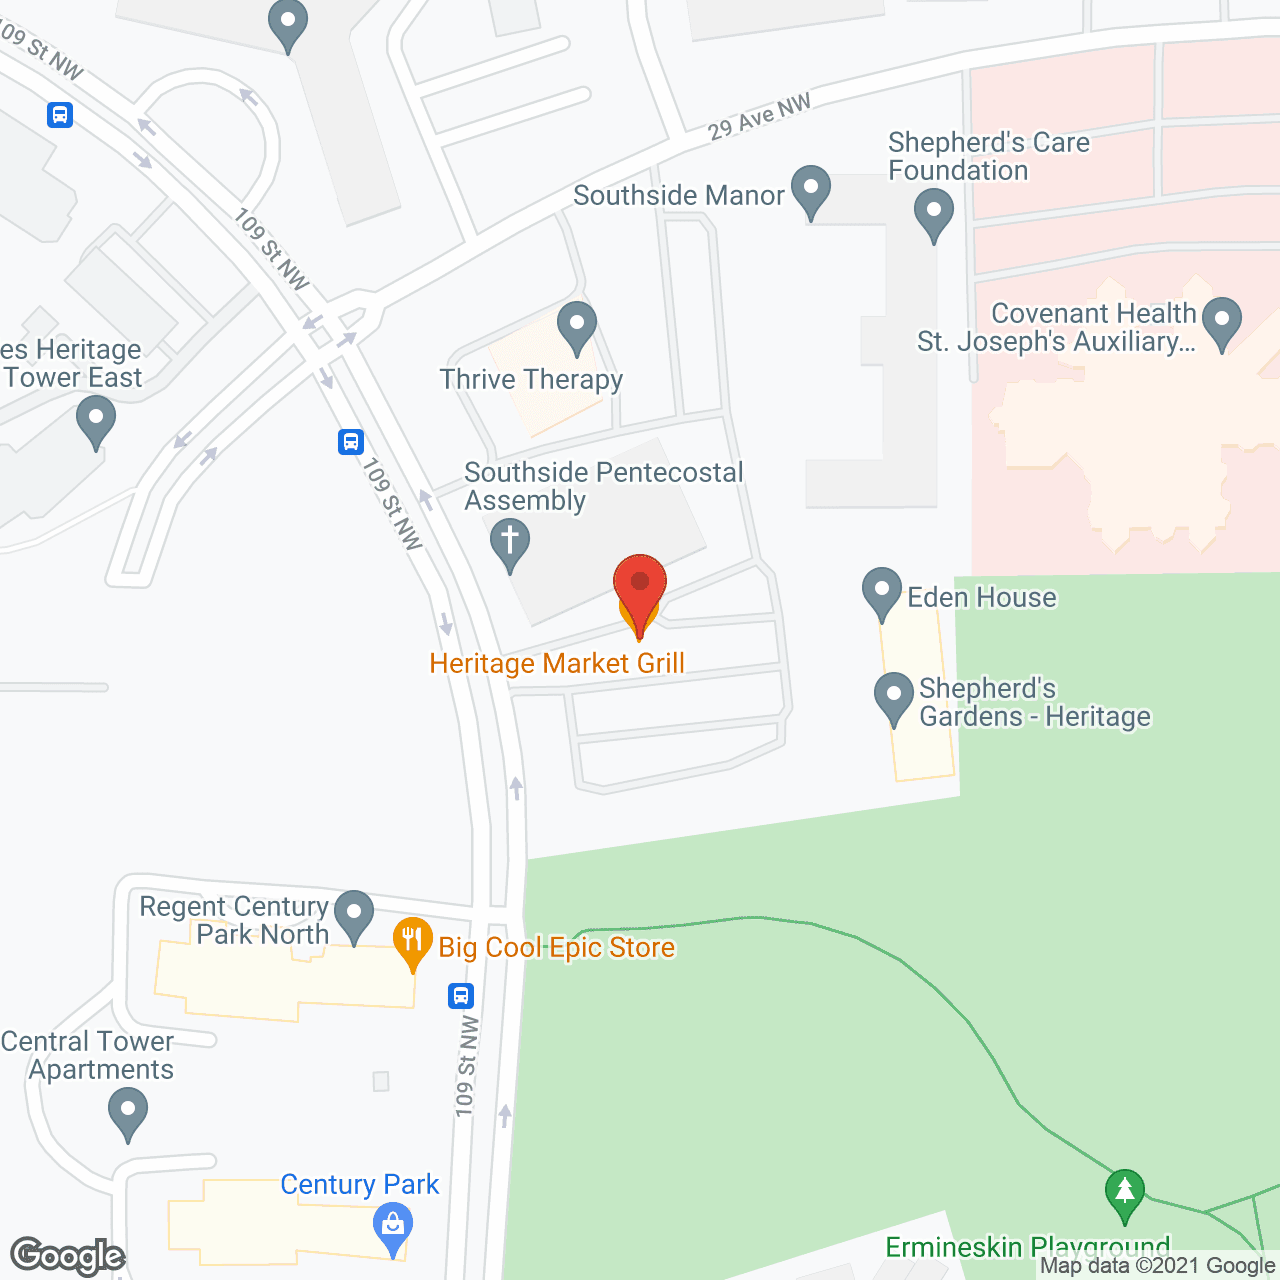 Eden House in google map